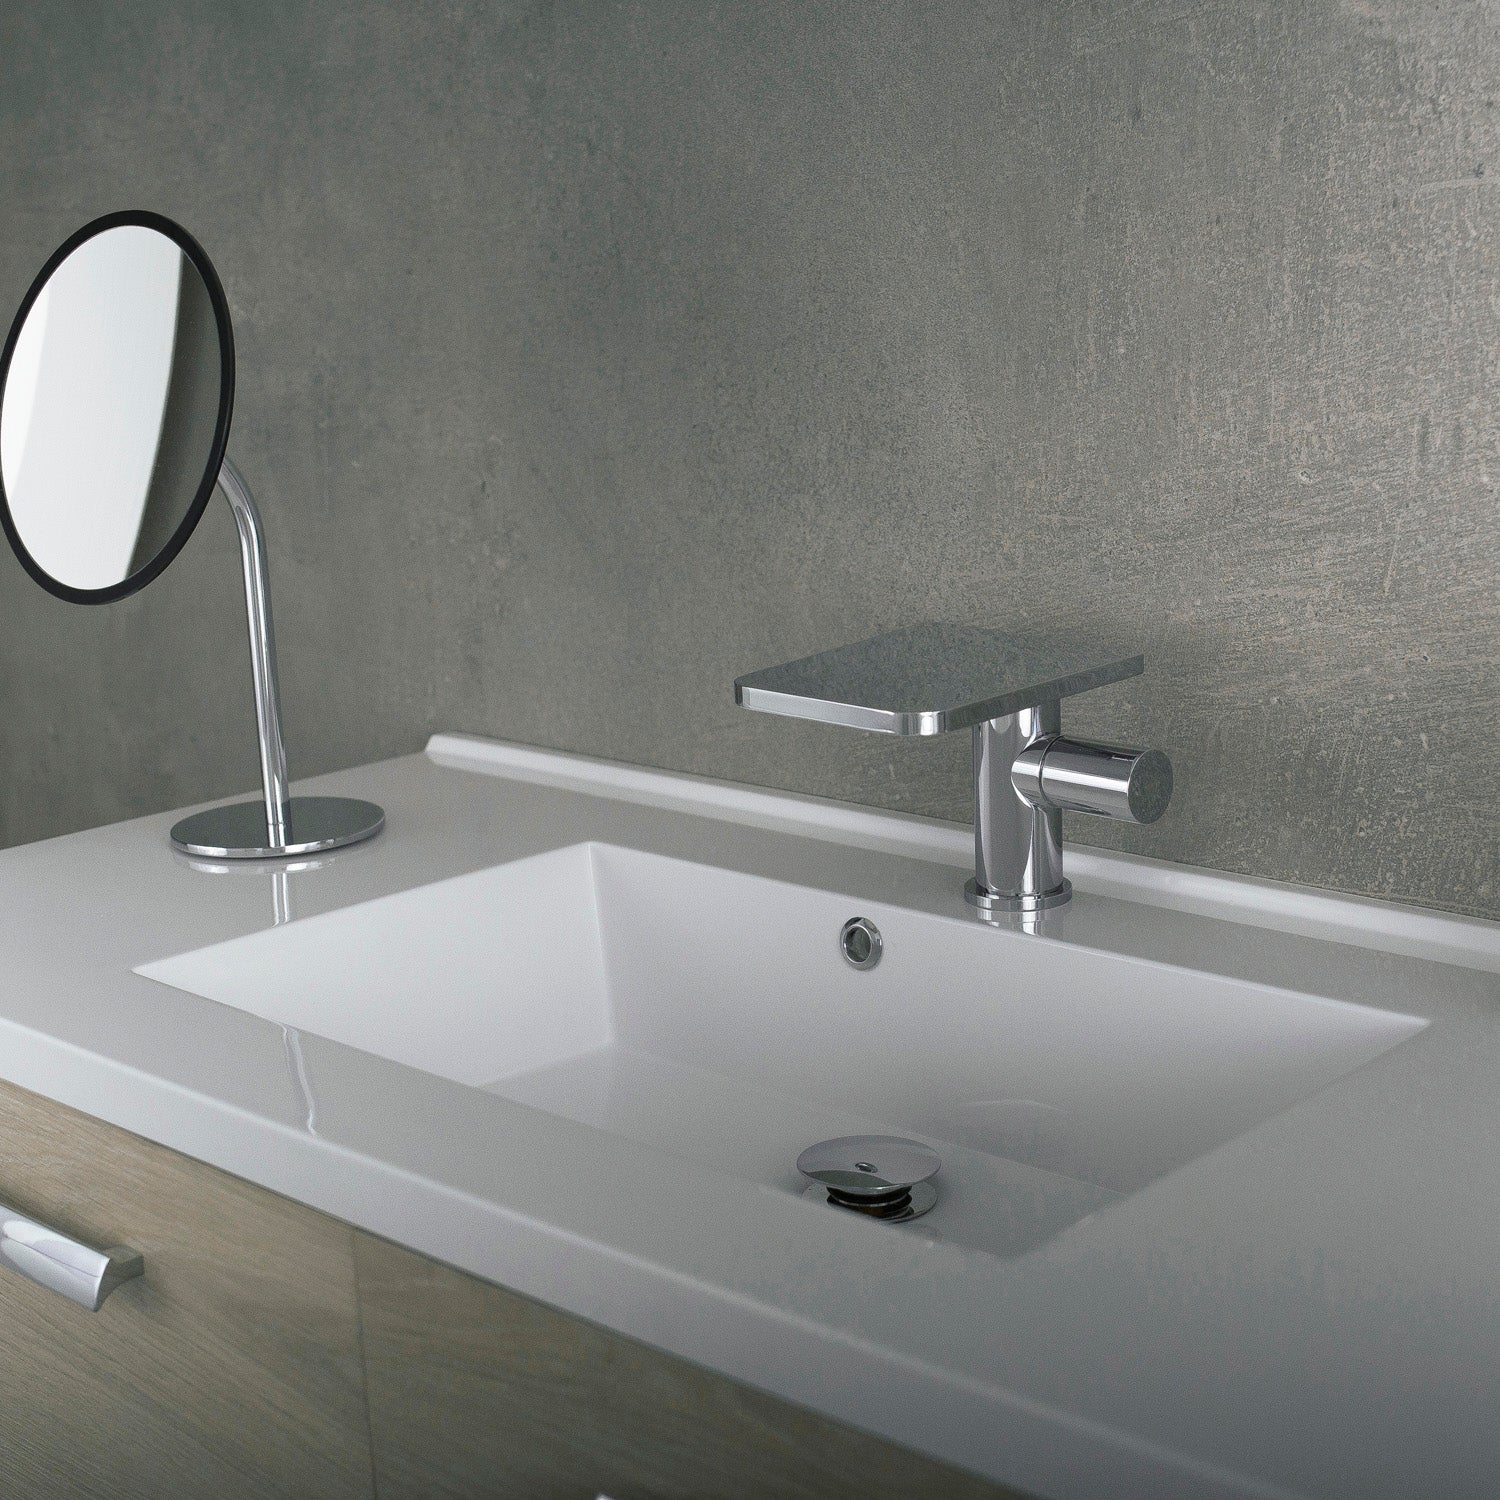 DAX Single Handle Waterfall Bathroom Faucet, Brass Body, Chrome Finish, 5-5/16 x 4-5/16 Inches (DAX-9888)